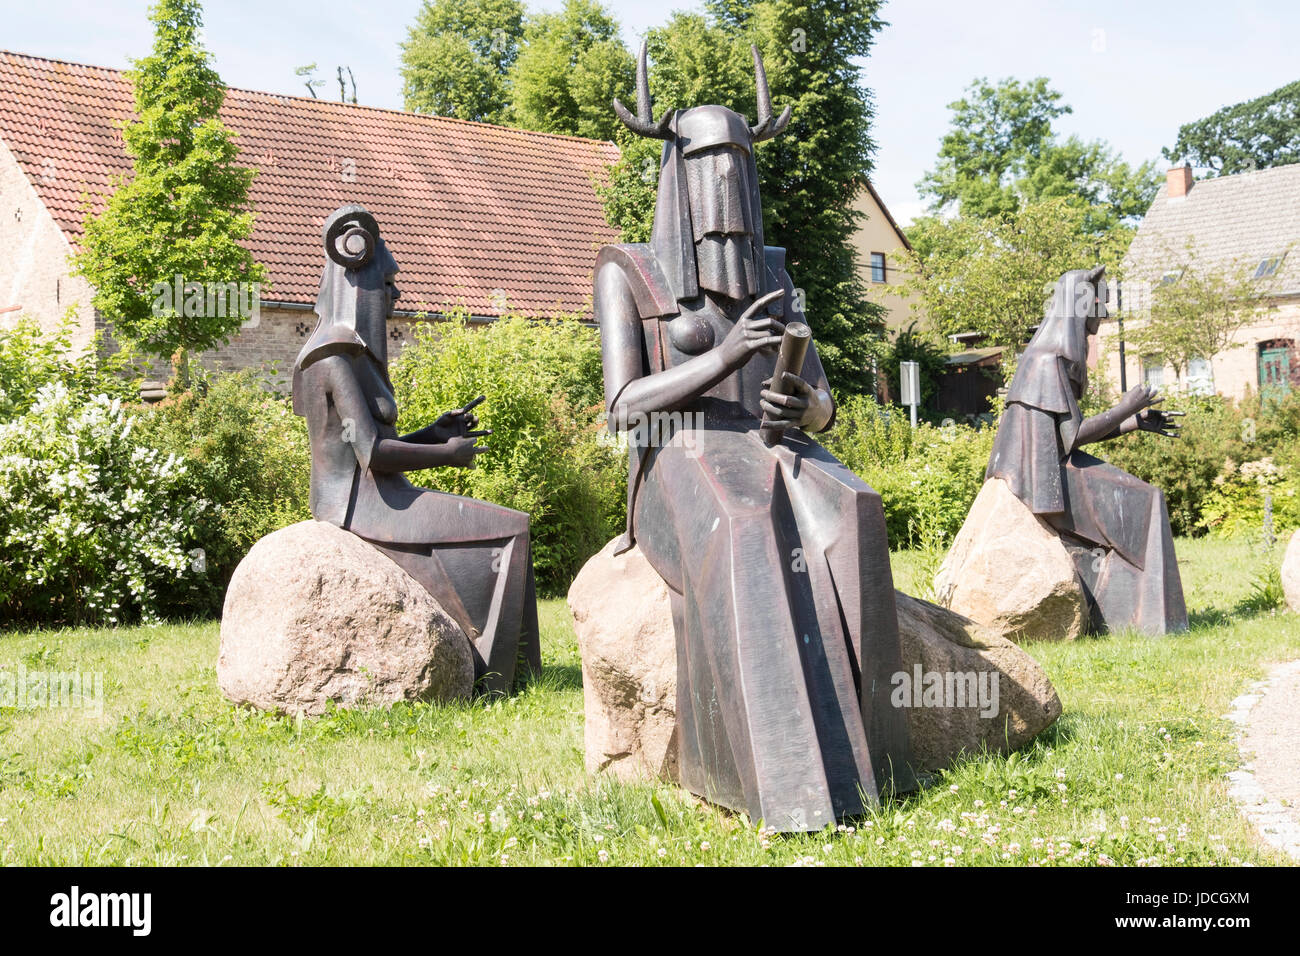 Nornan statues. German Gods of Fate, by Eckhard Hermann, Althüttendorf, Barnim, Brandenburg, Germany Stock Photo